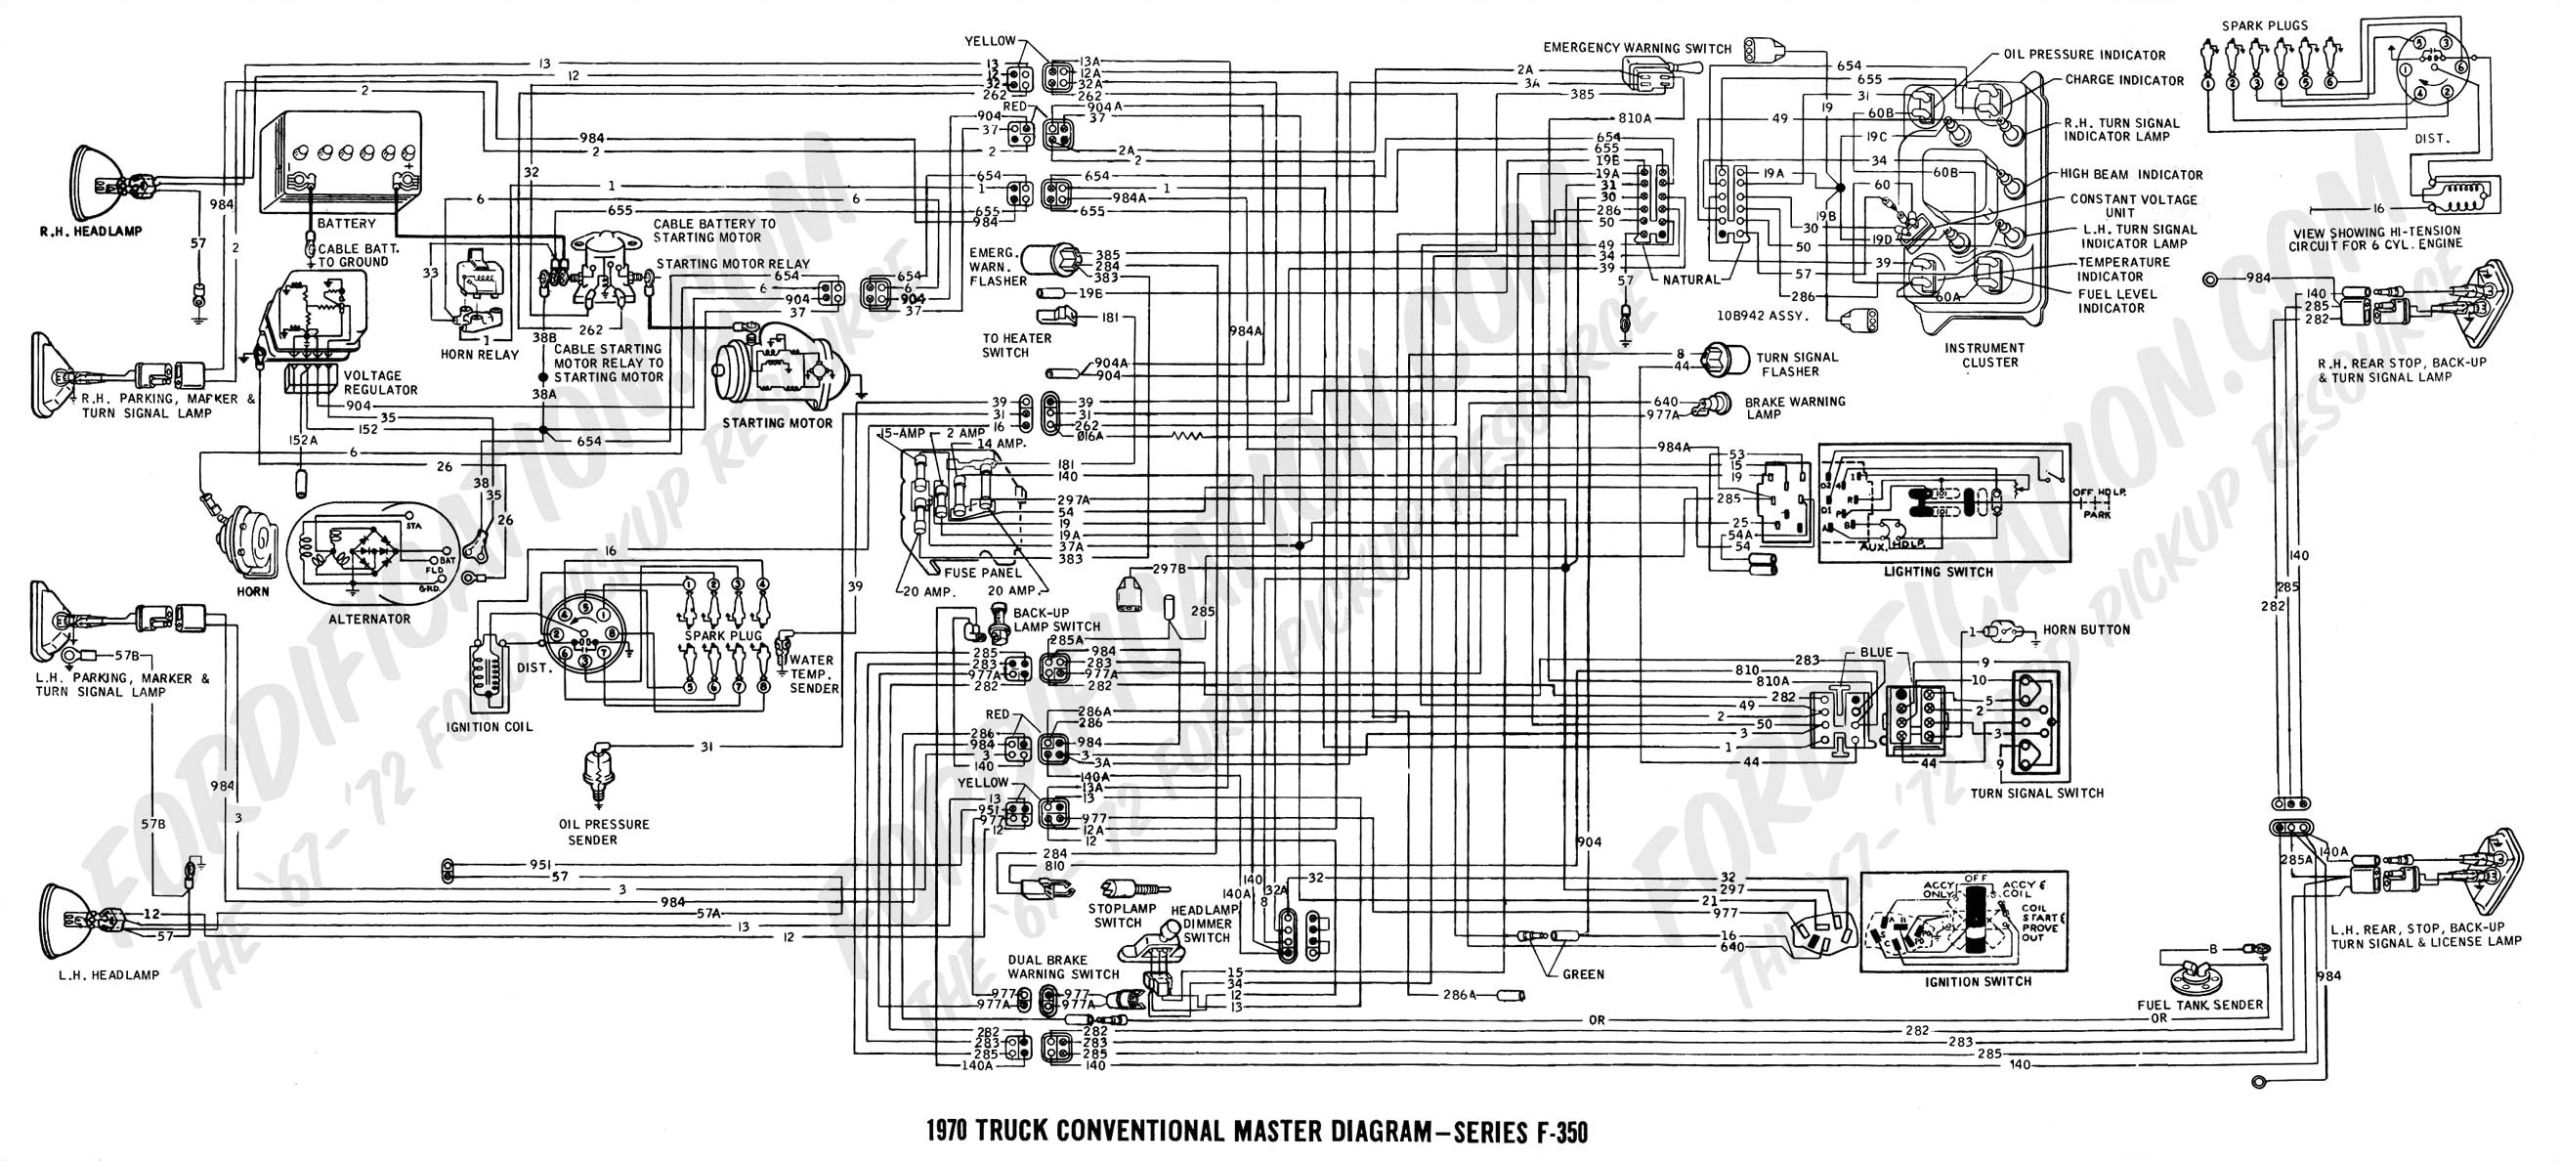 1990 lincoln town car wiring diagram 2000 ford f 250 wiring diagram also 2006 ford e250 van wiring of 1990 lincoln town car wiring diagram jpg